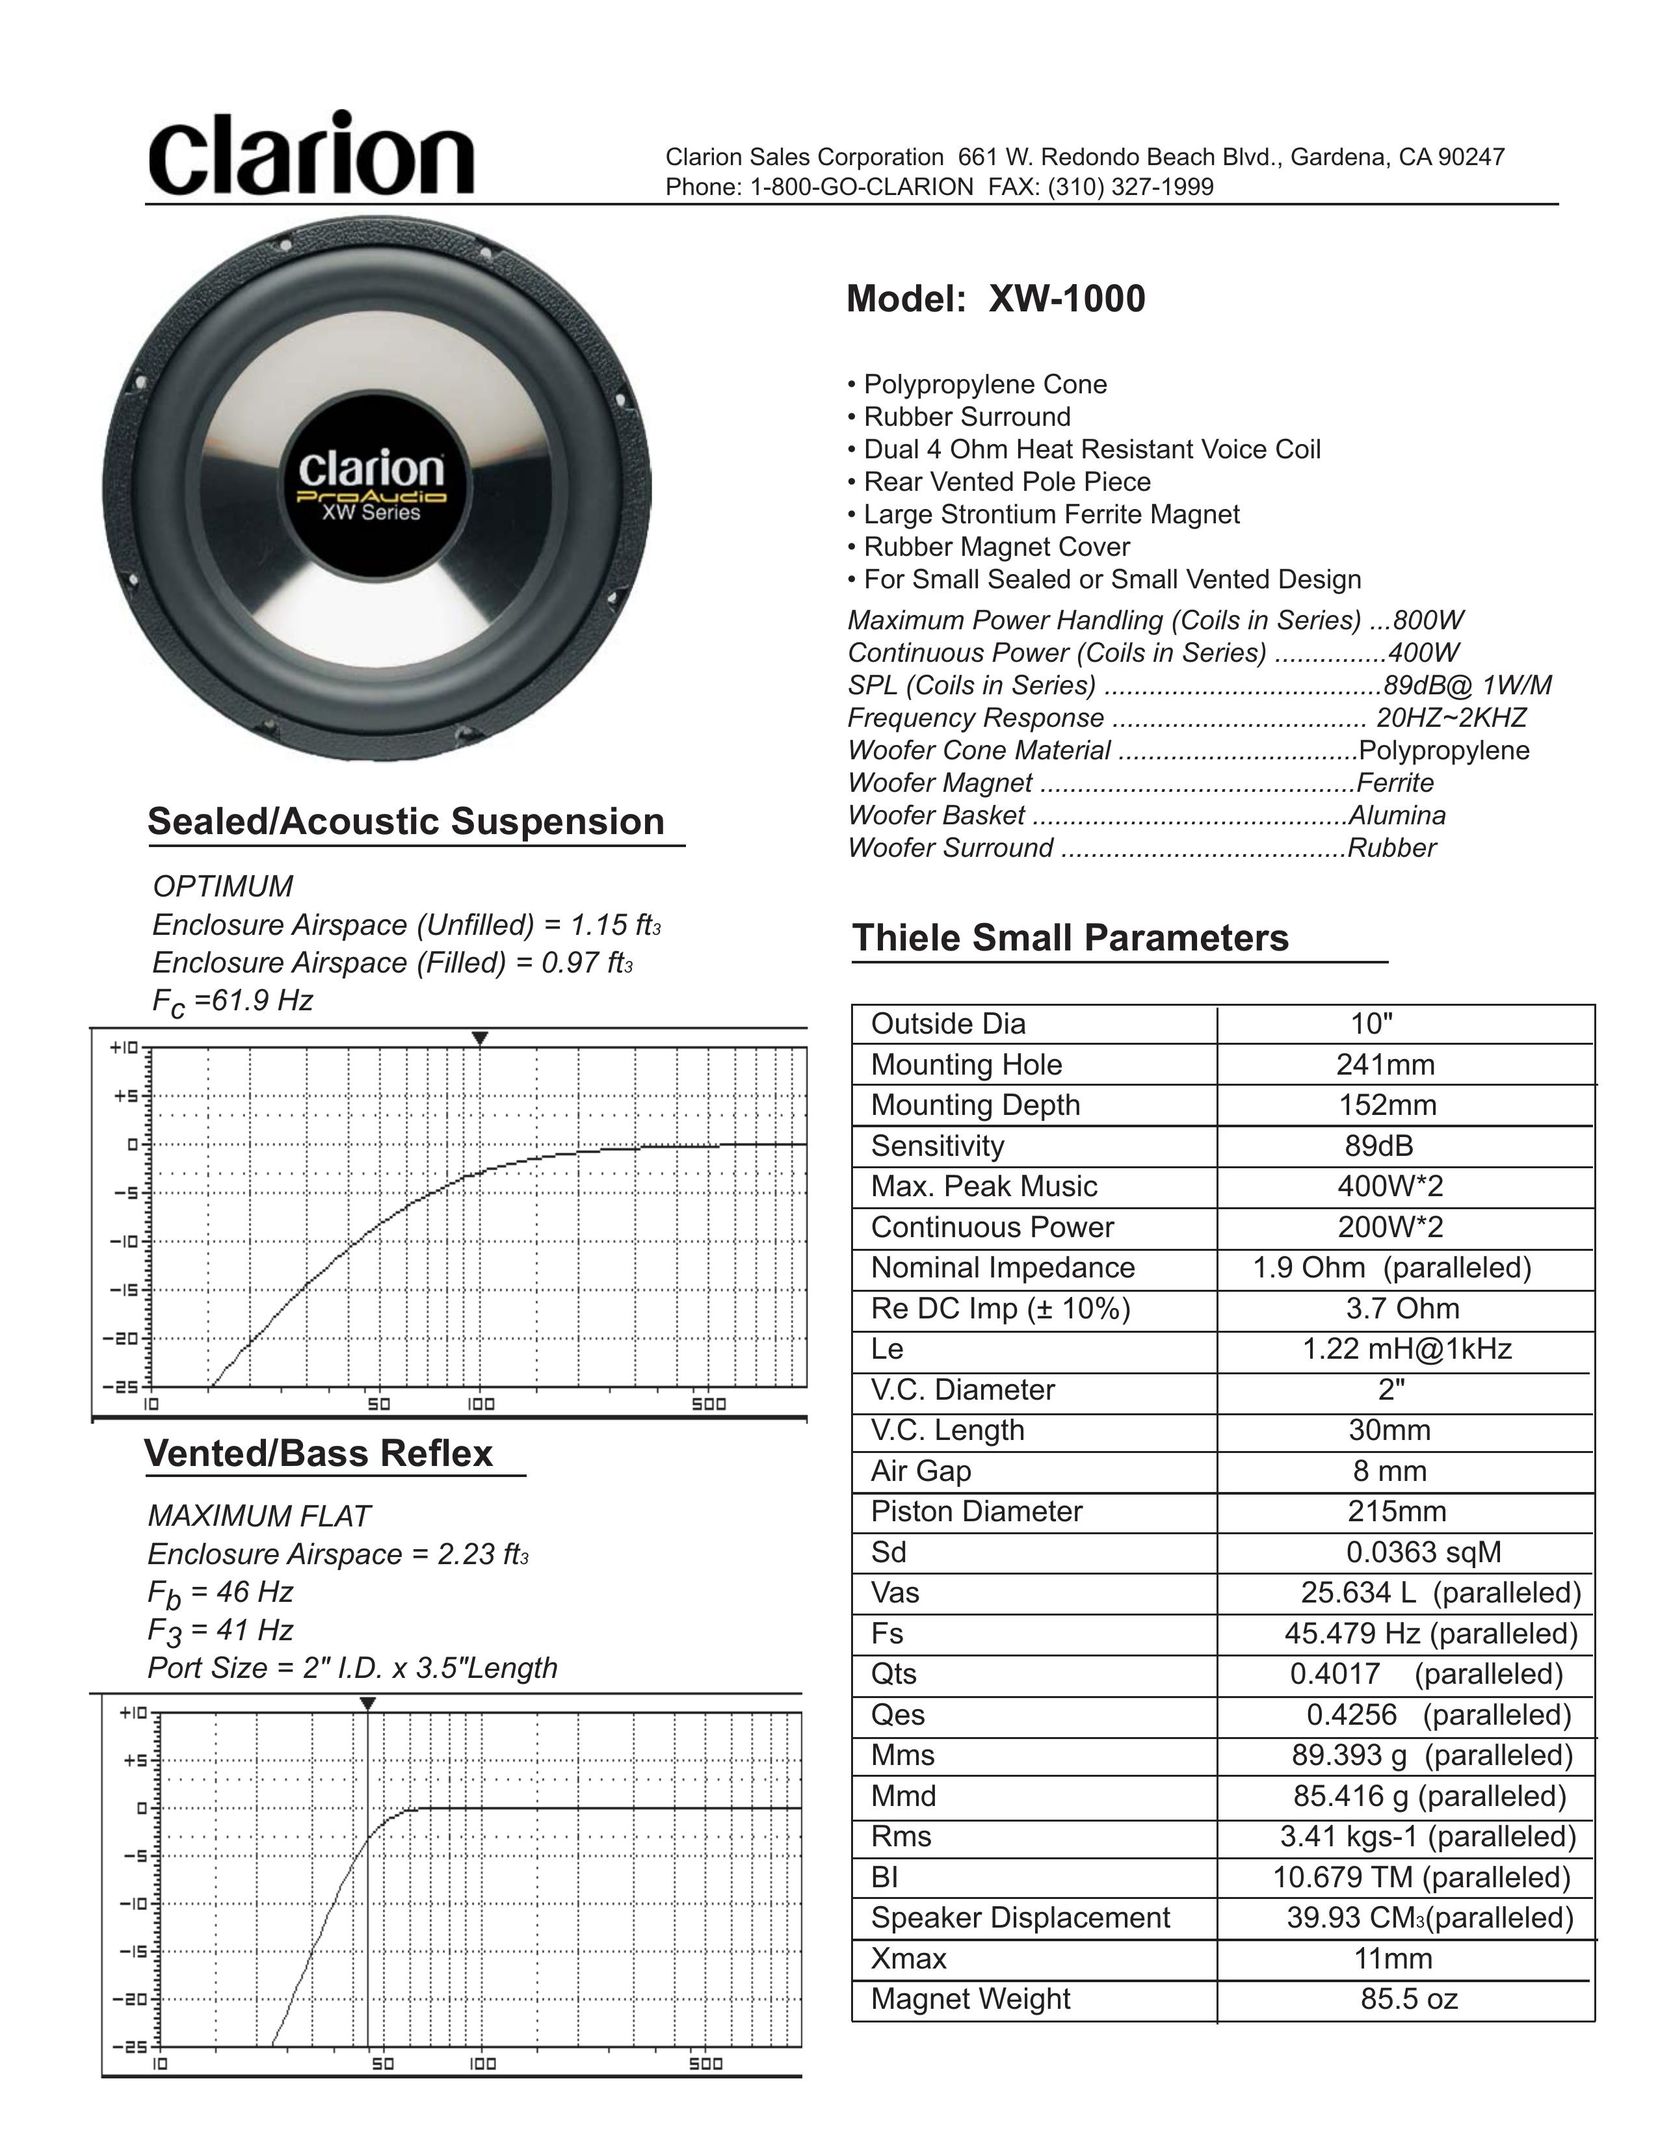 Clarion XW-1000 Speaker User Manual